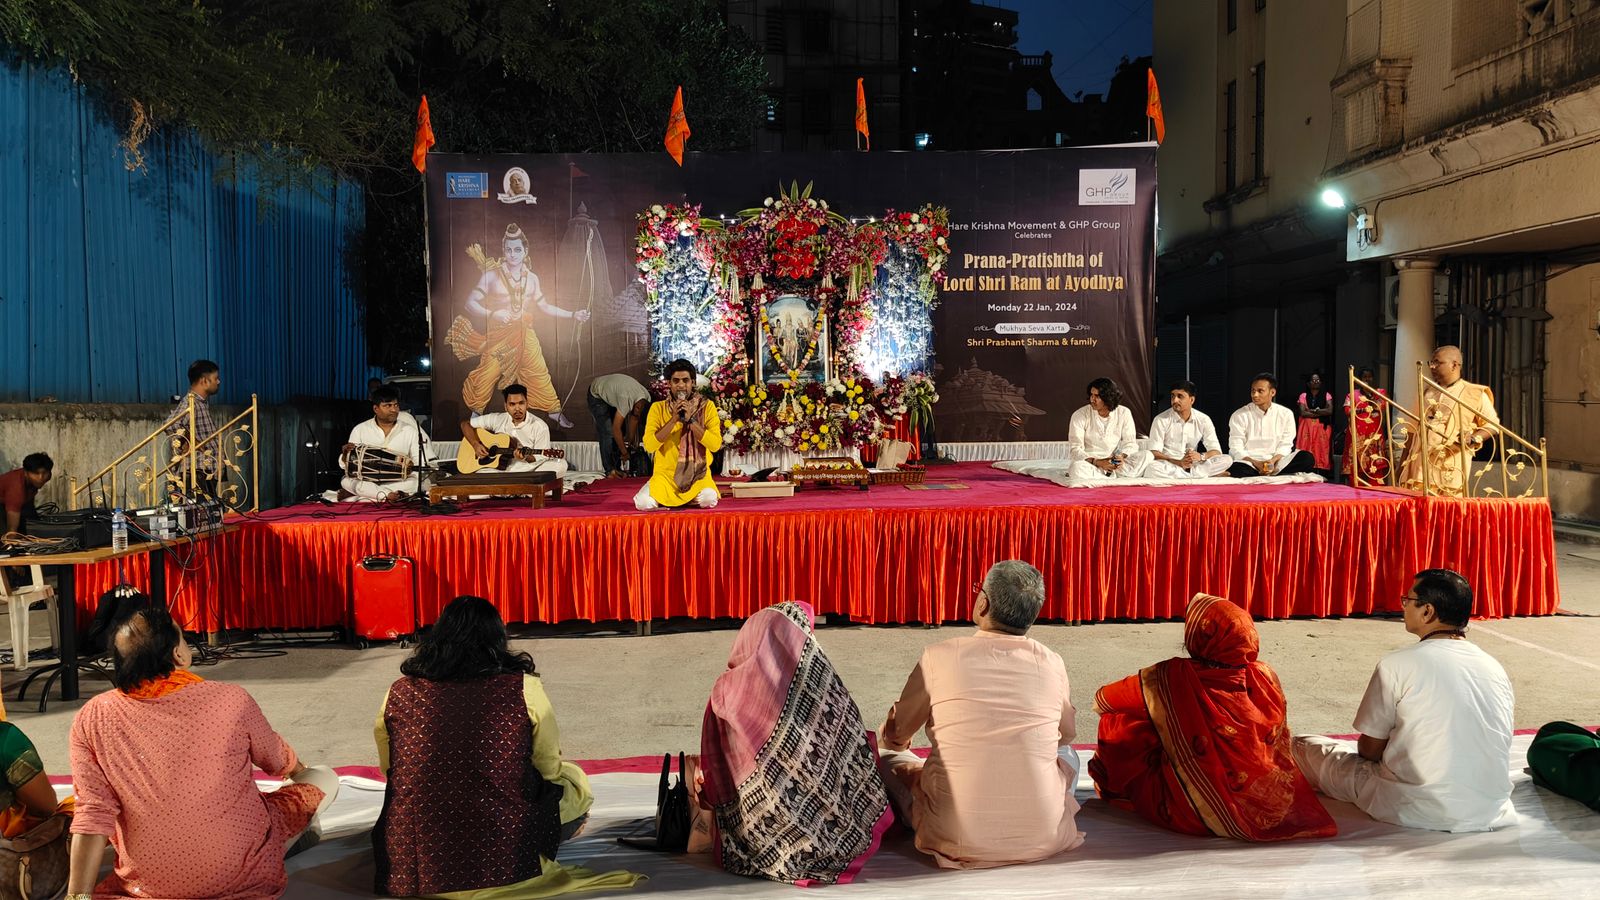 Celebration Marks Inauguration of Lord Shri Ram's Prana-Pratishtha in Powai